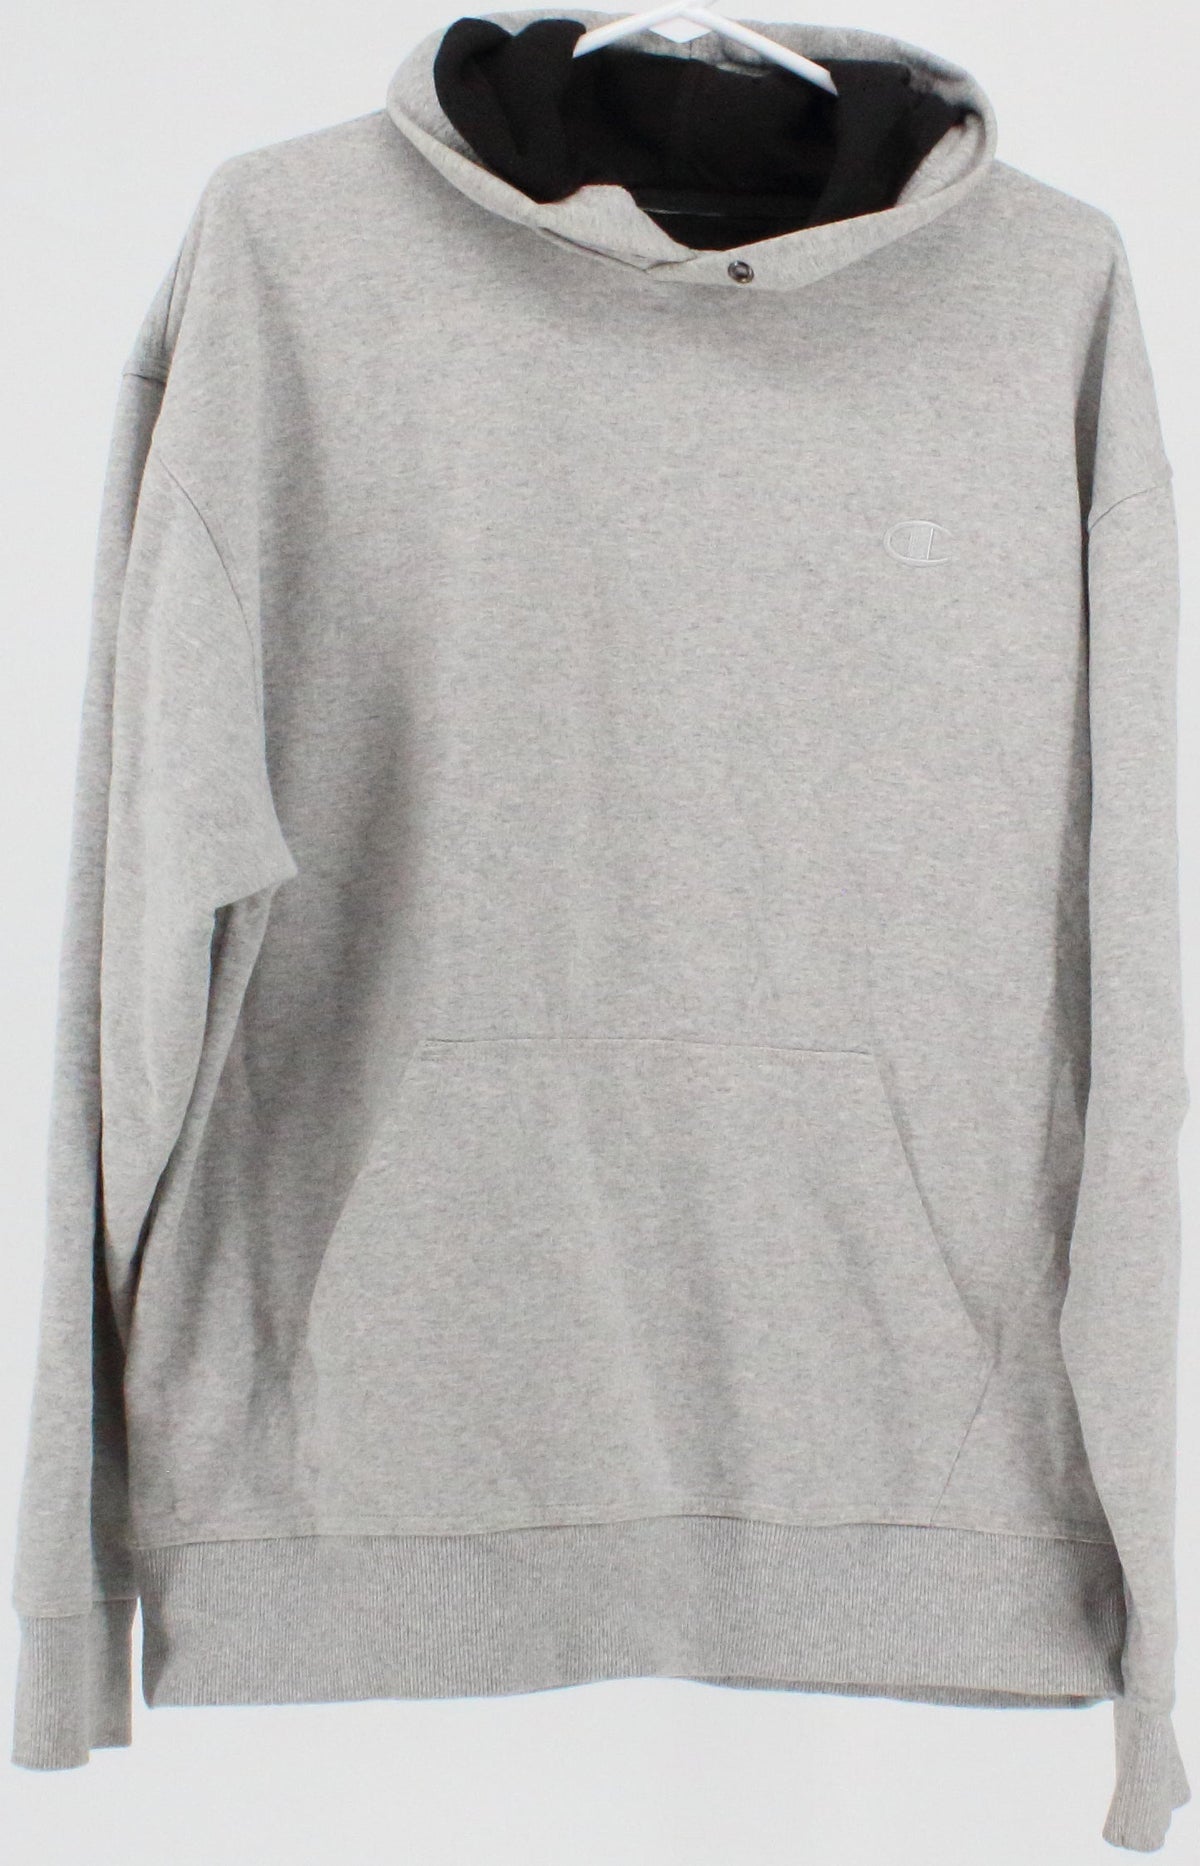 Champion Grey Melange Hooded Sweatshirt With Black Lining